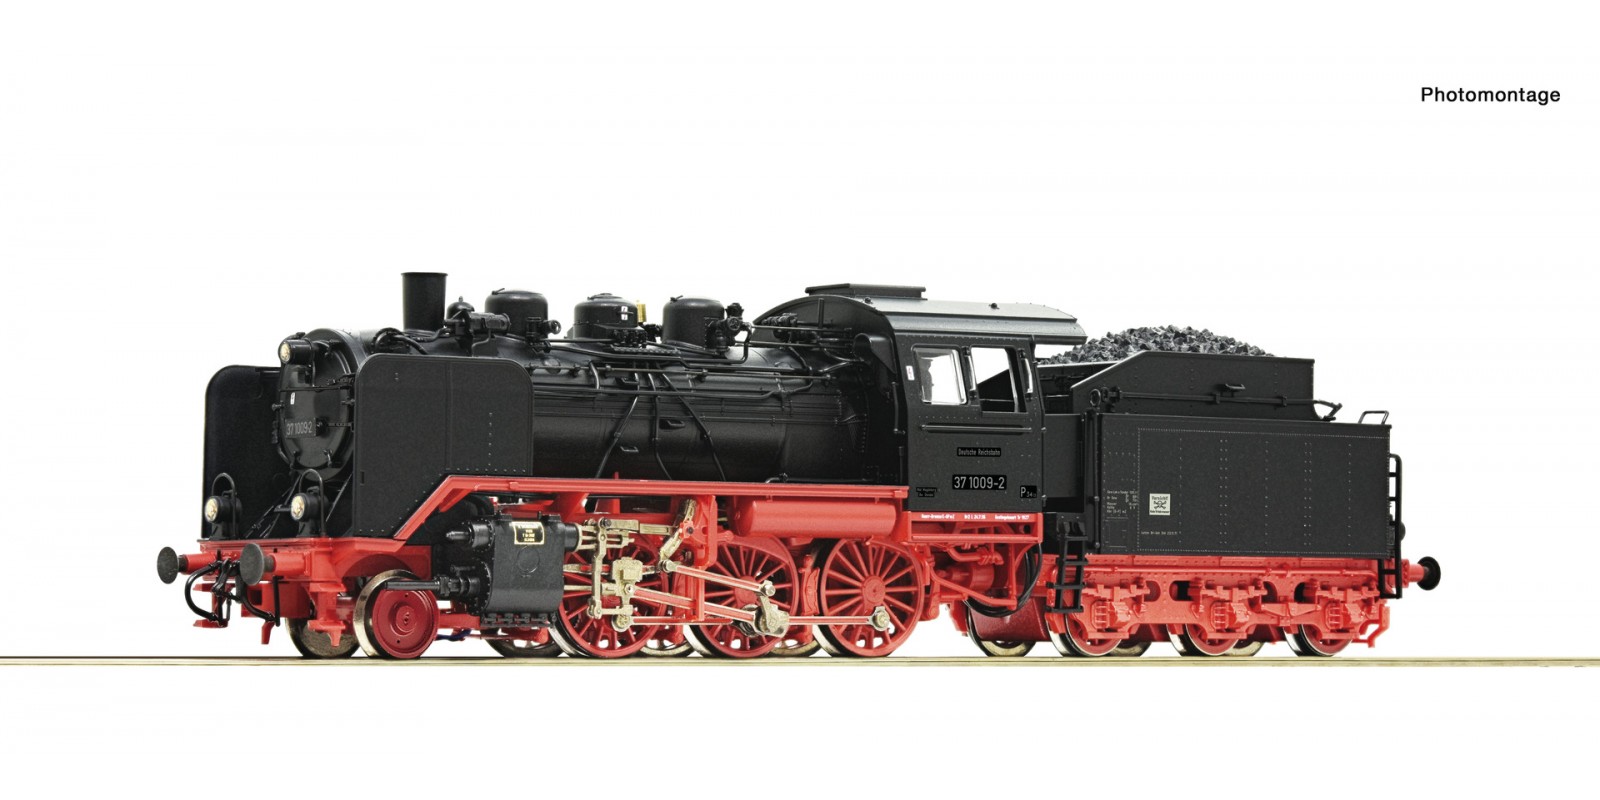 RO71211 Steam locomotive 37 1009-2